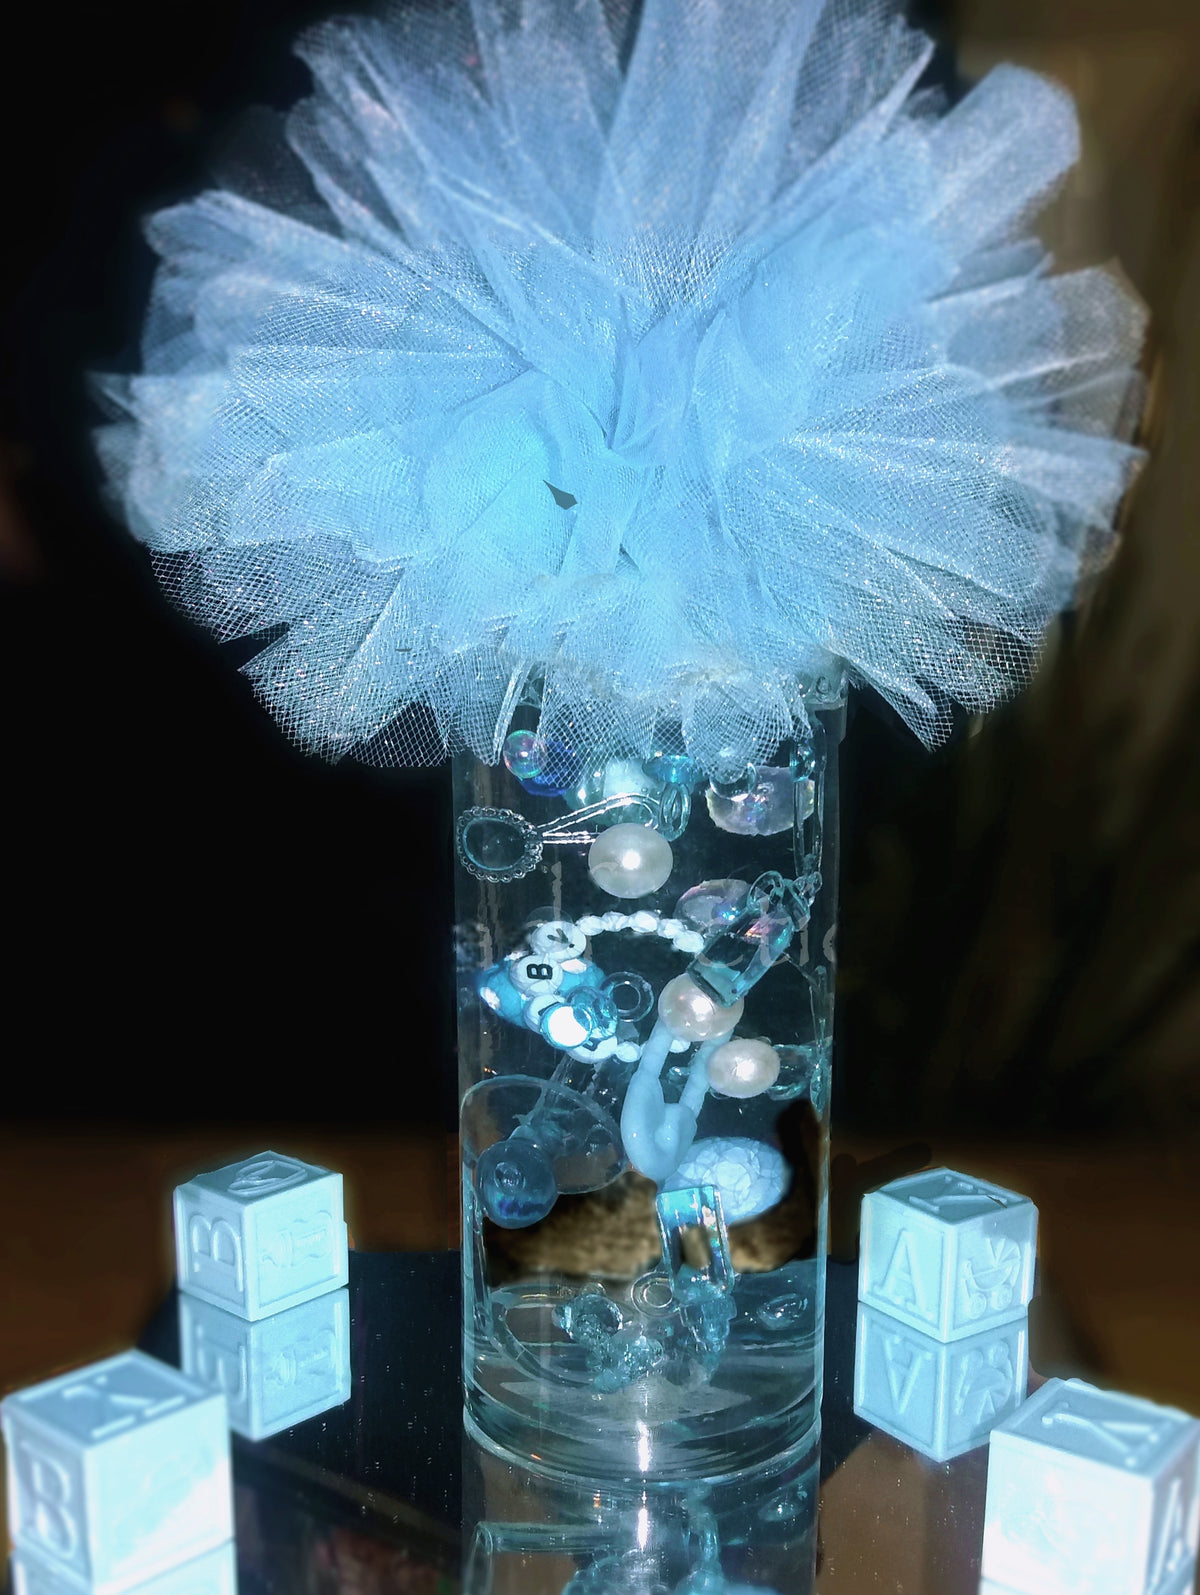 Floating Blue Baby Shower Centerpiece Decorations - Fills 1 GL for your vases - Including  Must Have Transparent Gels kit for the Floating Effect!